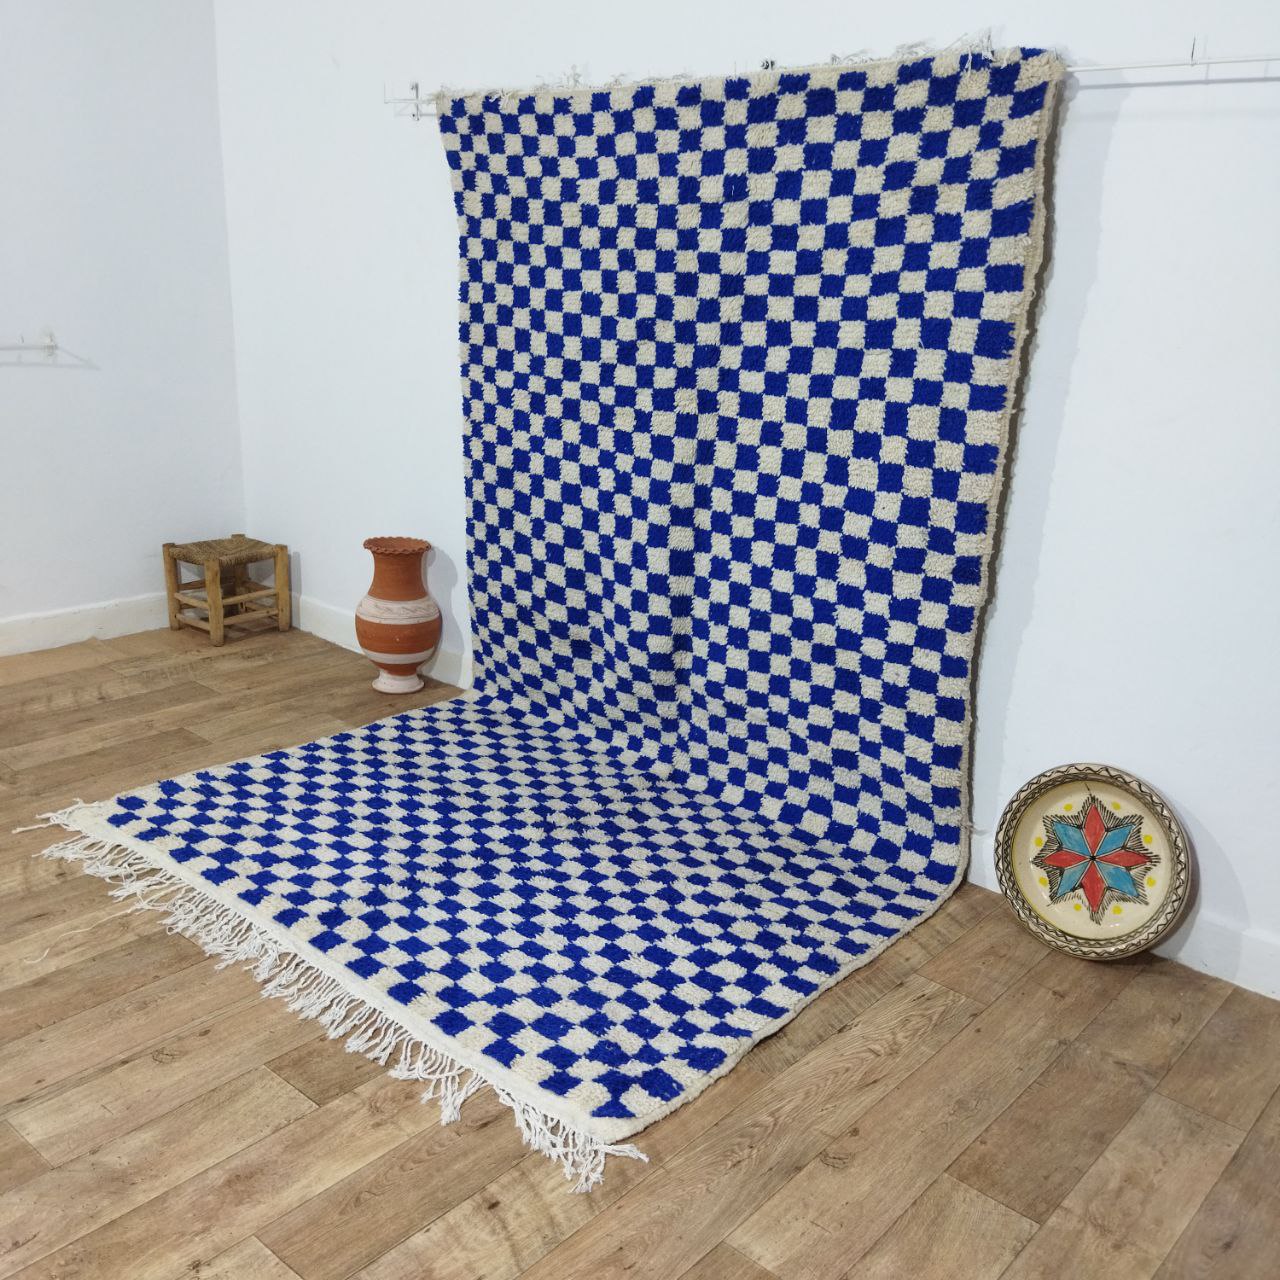 Blue Handmade Rug, Blue Checkered Rug - Berber style wool rug from Morocco - Modern rug